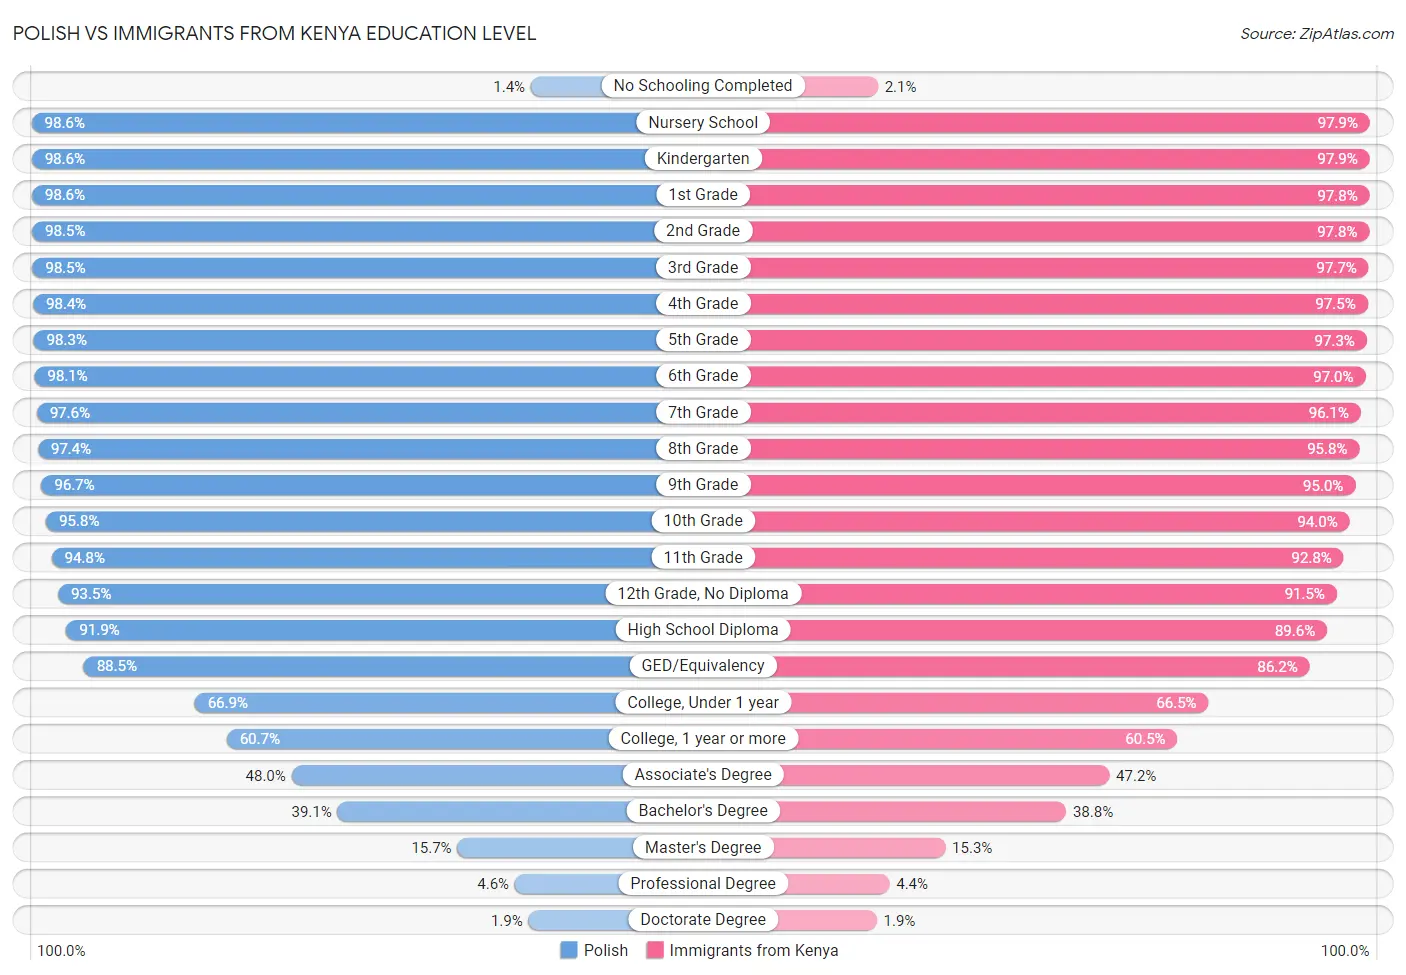 Polish vs Immigrants from Kenya Education Level